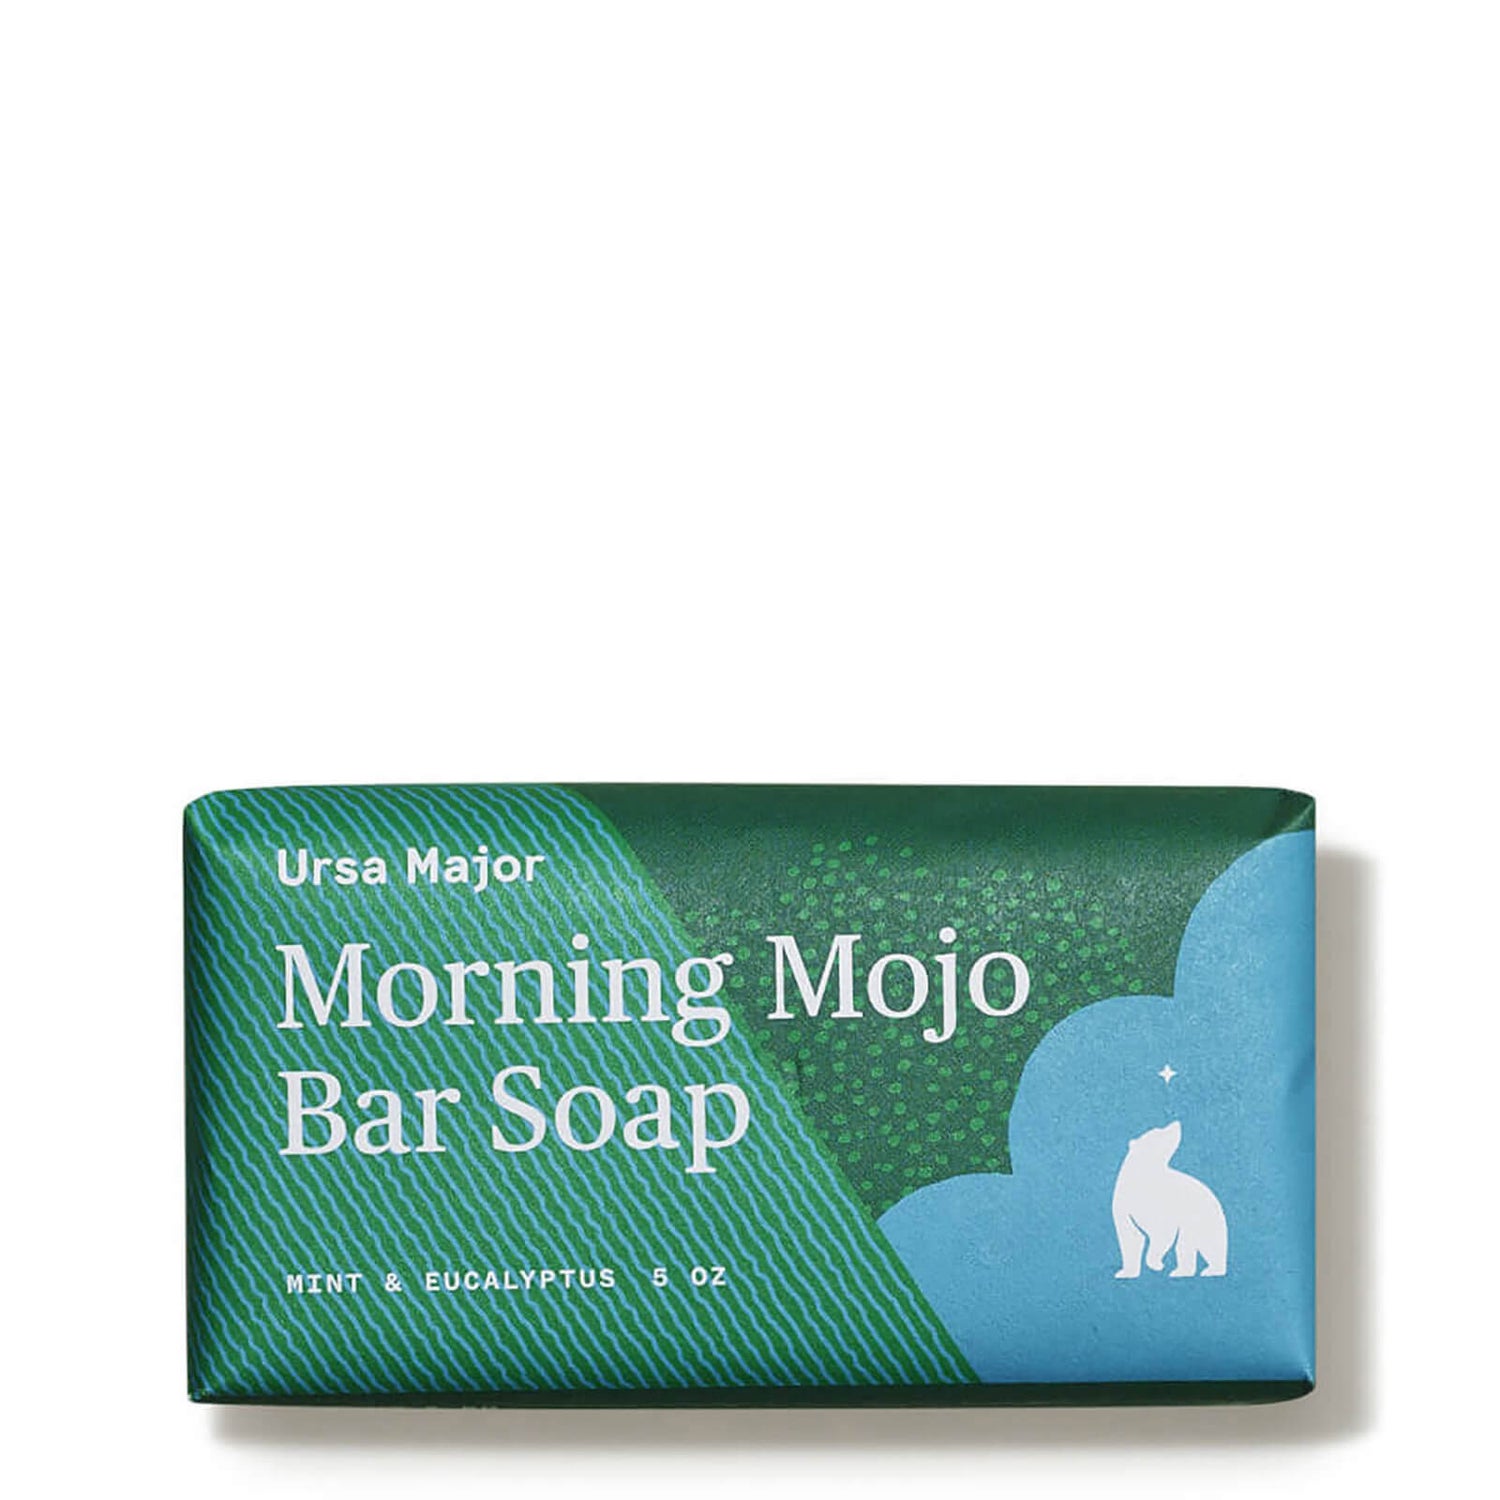 Ursa Major Morning Mojo Bar Soap (5 oz.)